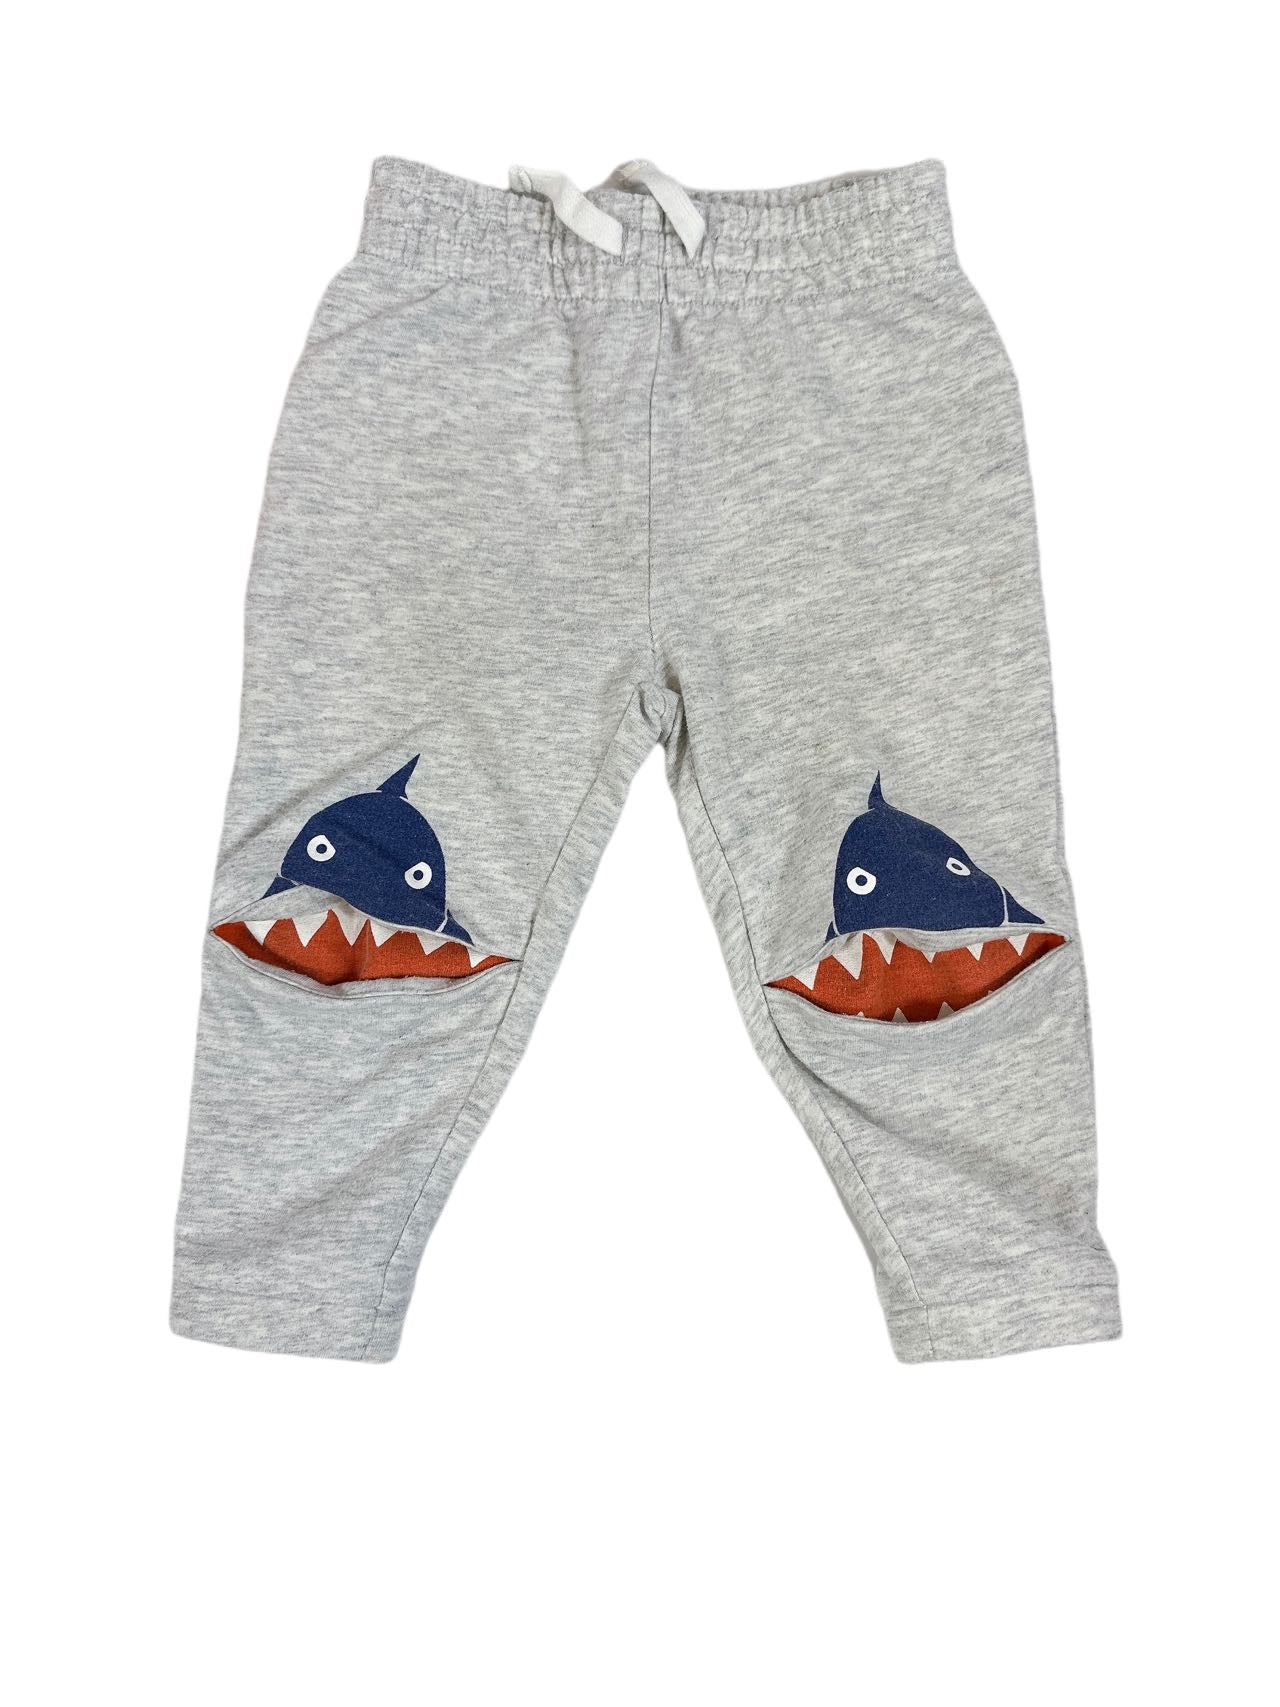 Baby Shark pants(6M)